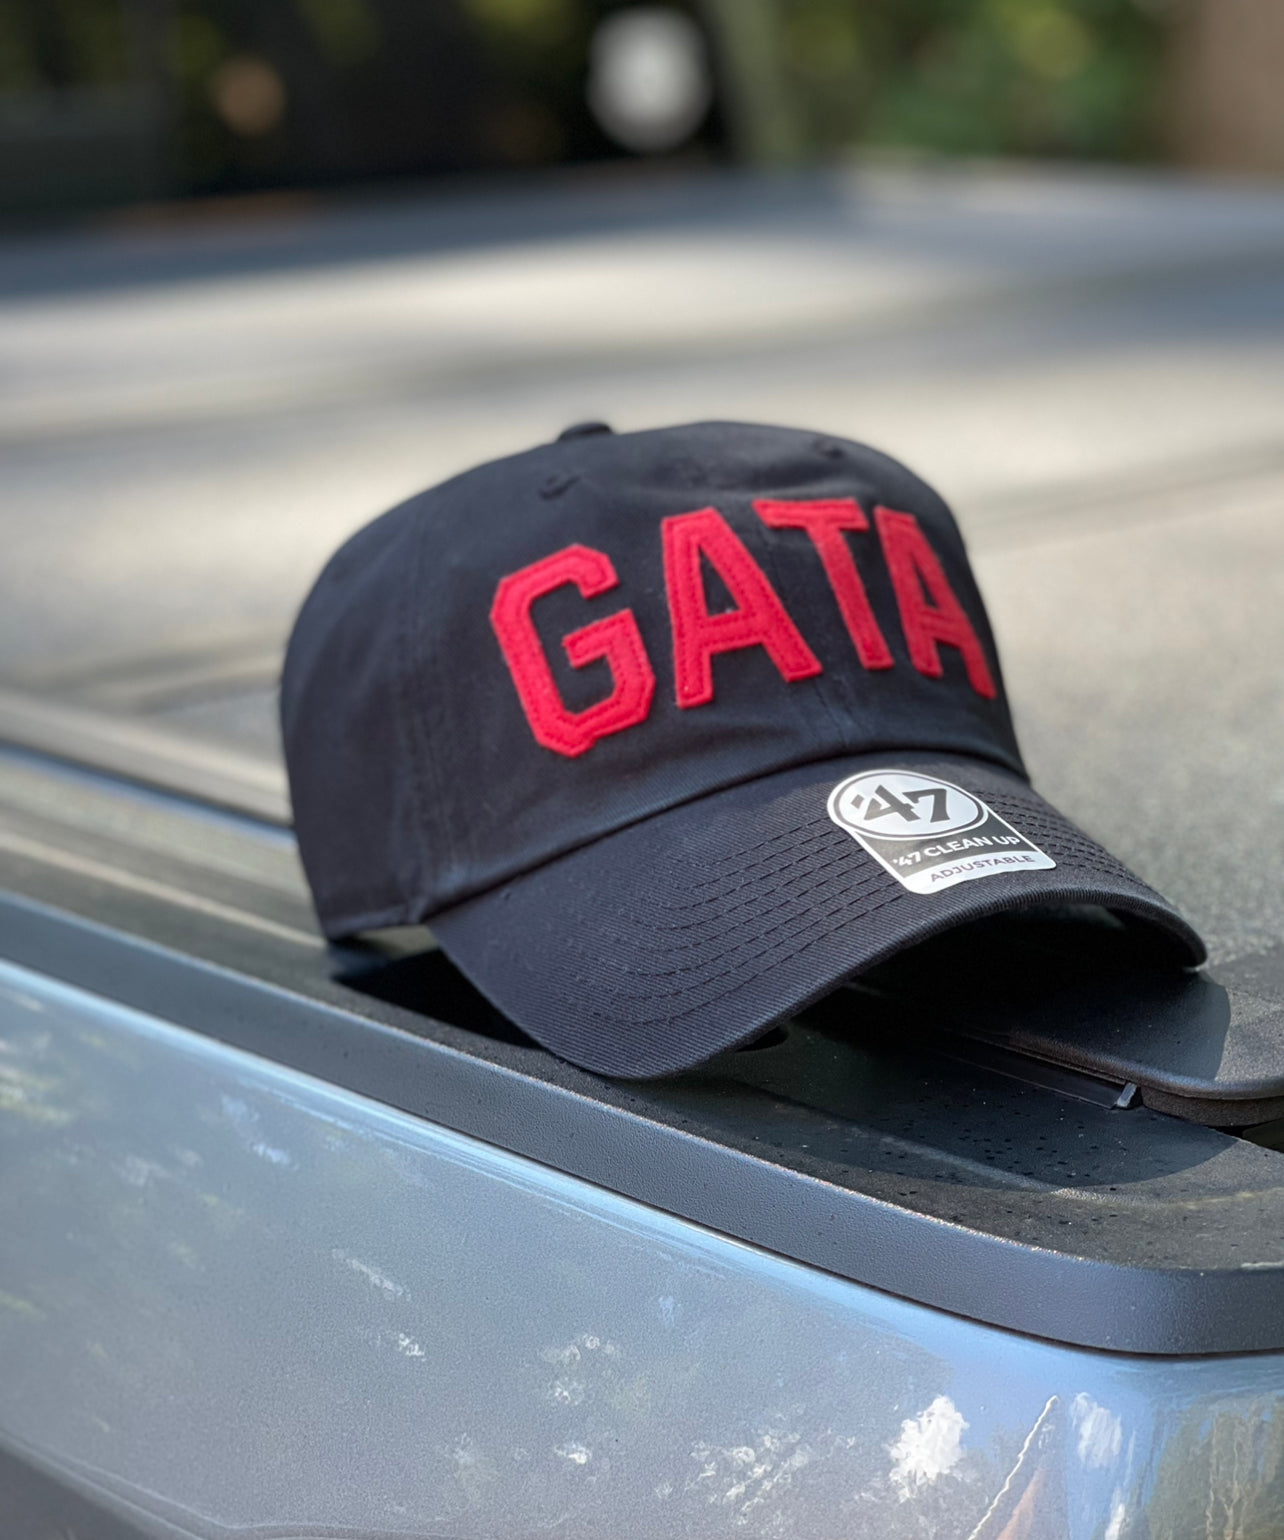 Georgia "GATA" 47' Brand Hat